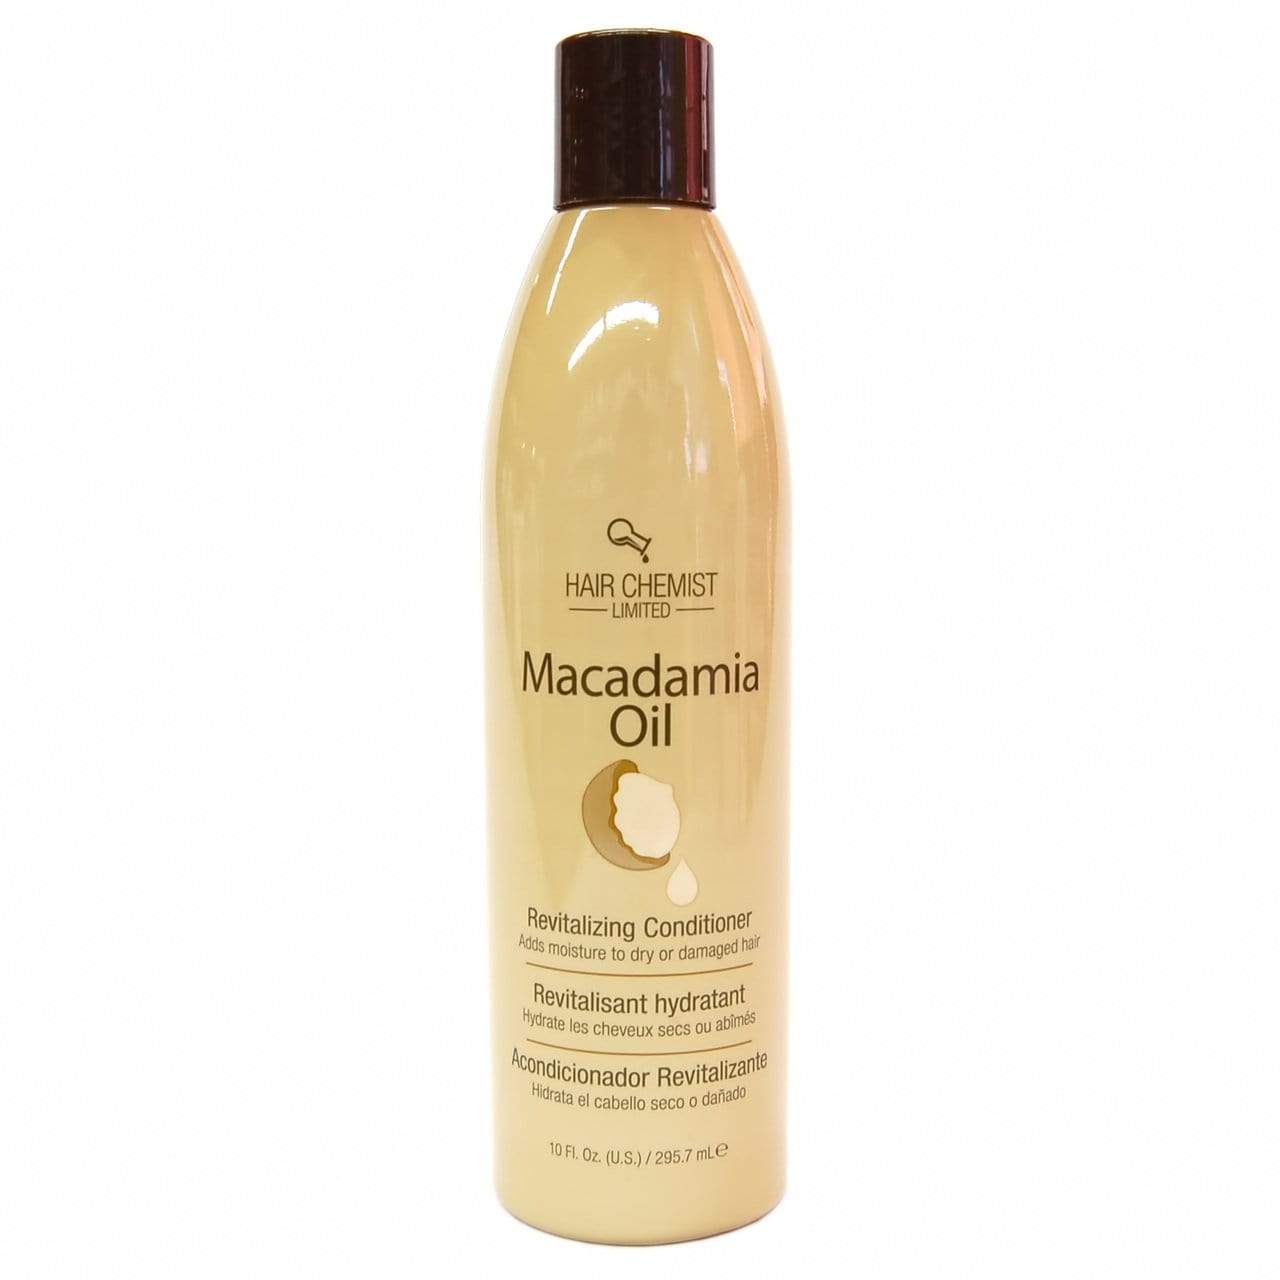 Hair Chemist - Macadamia Oil - "Revitalizing Conditioner" - 284g - Hair Chemist - Ethni Beauty Market